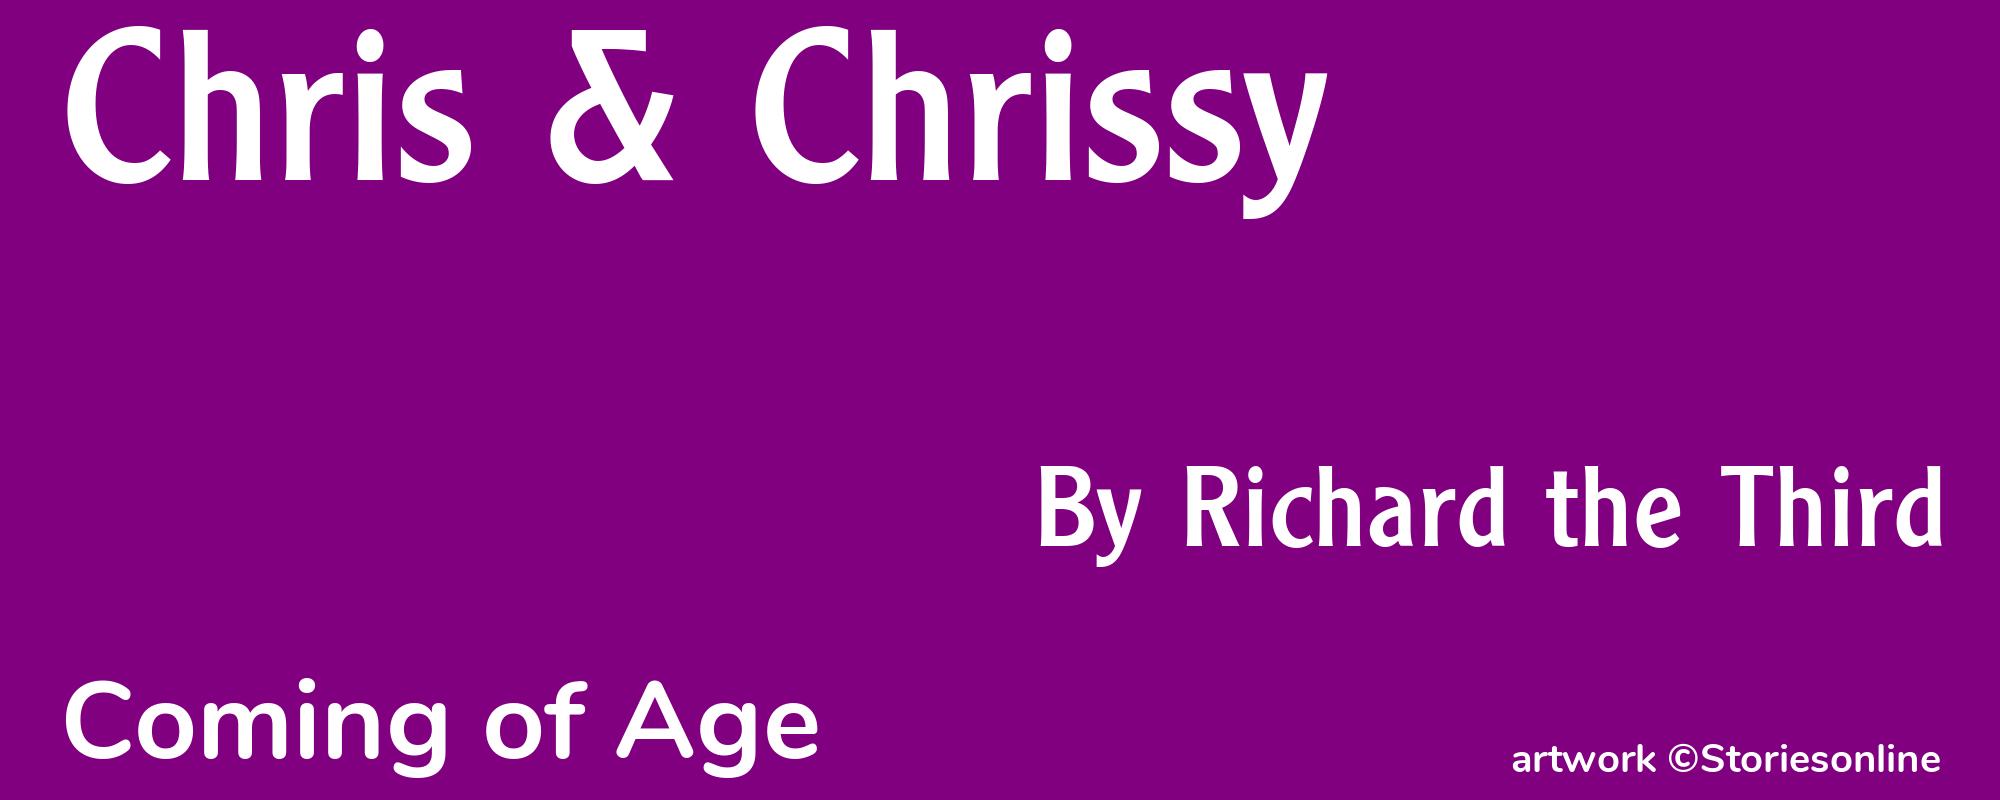 Chris & Chrissy - Cover